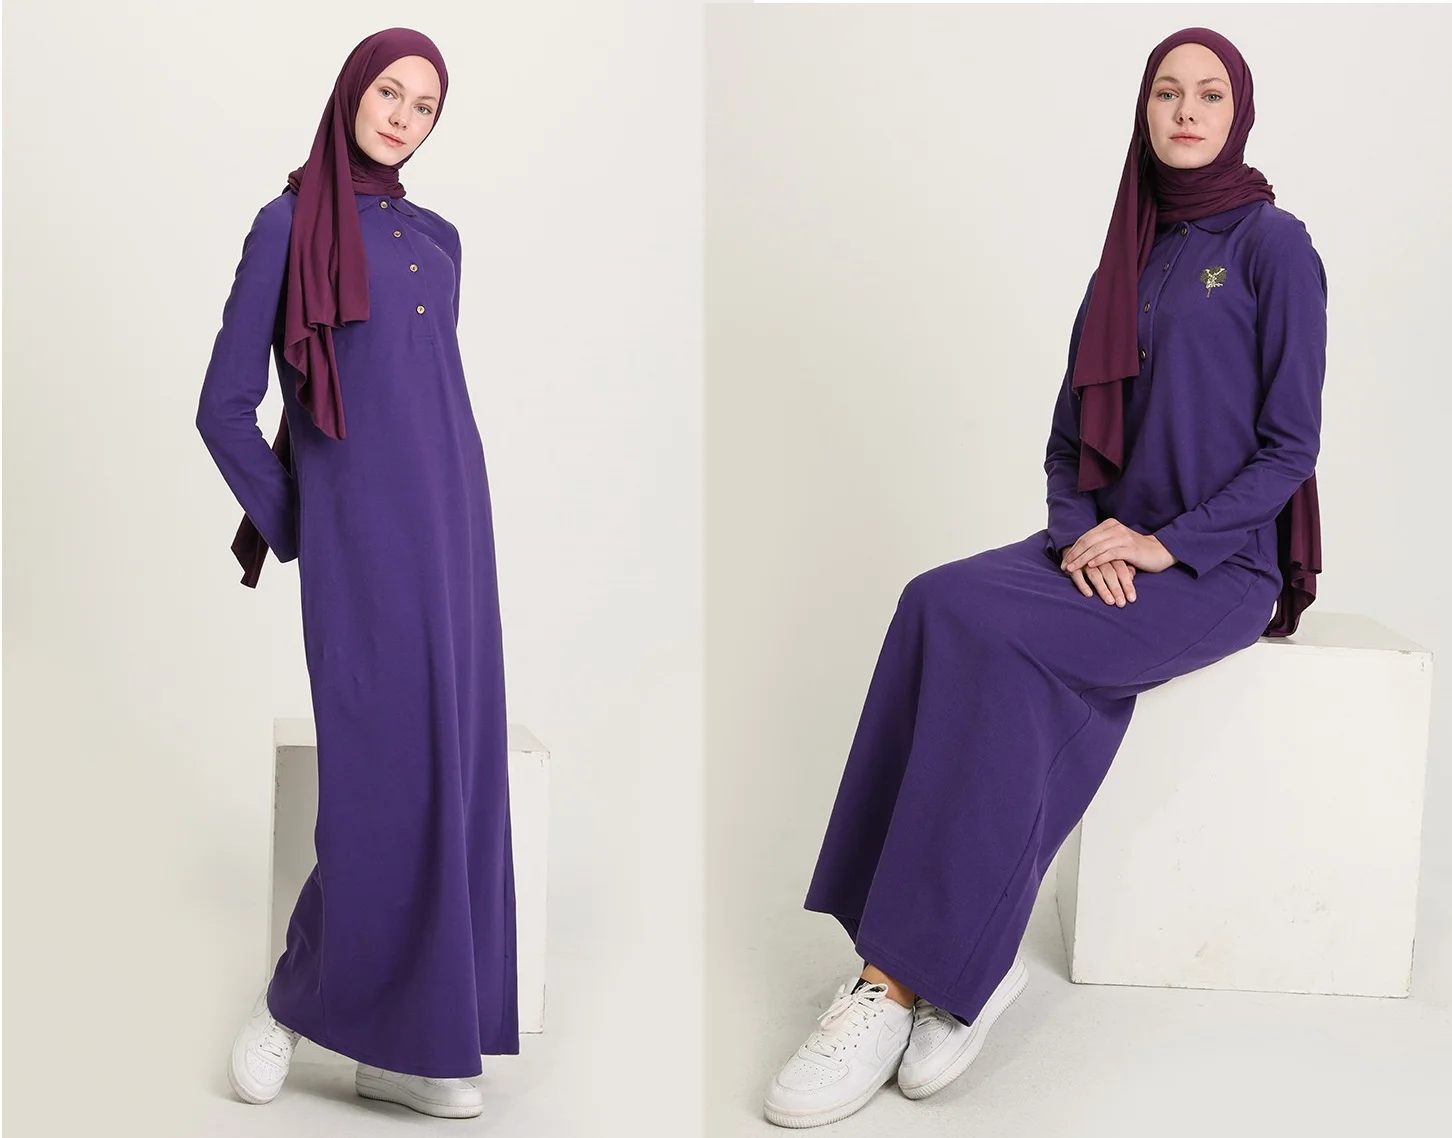 

4 Seasons Muslim Women's plain plain patted unlined sports dress daily casual mold fashion stylish Islamic clothing purple khaki burgundy shawl